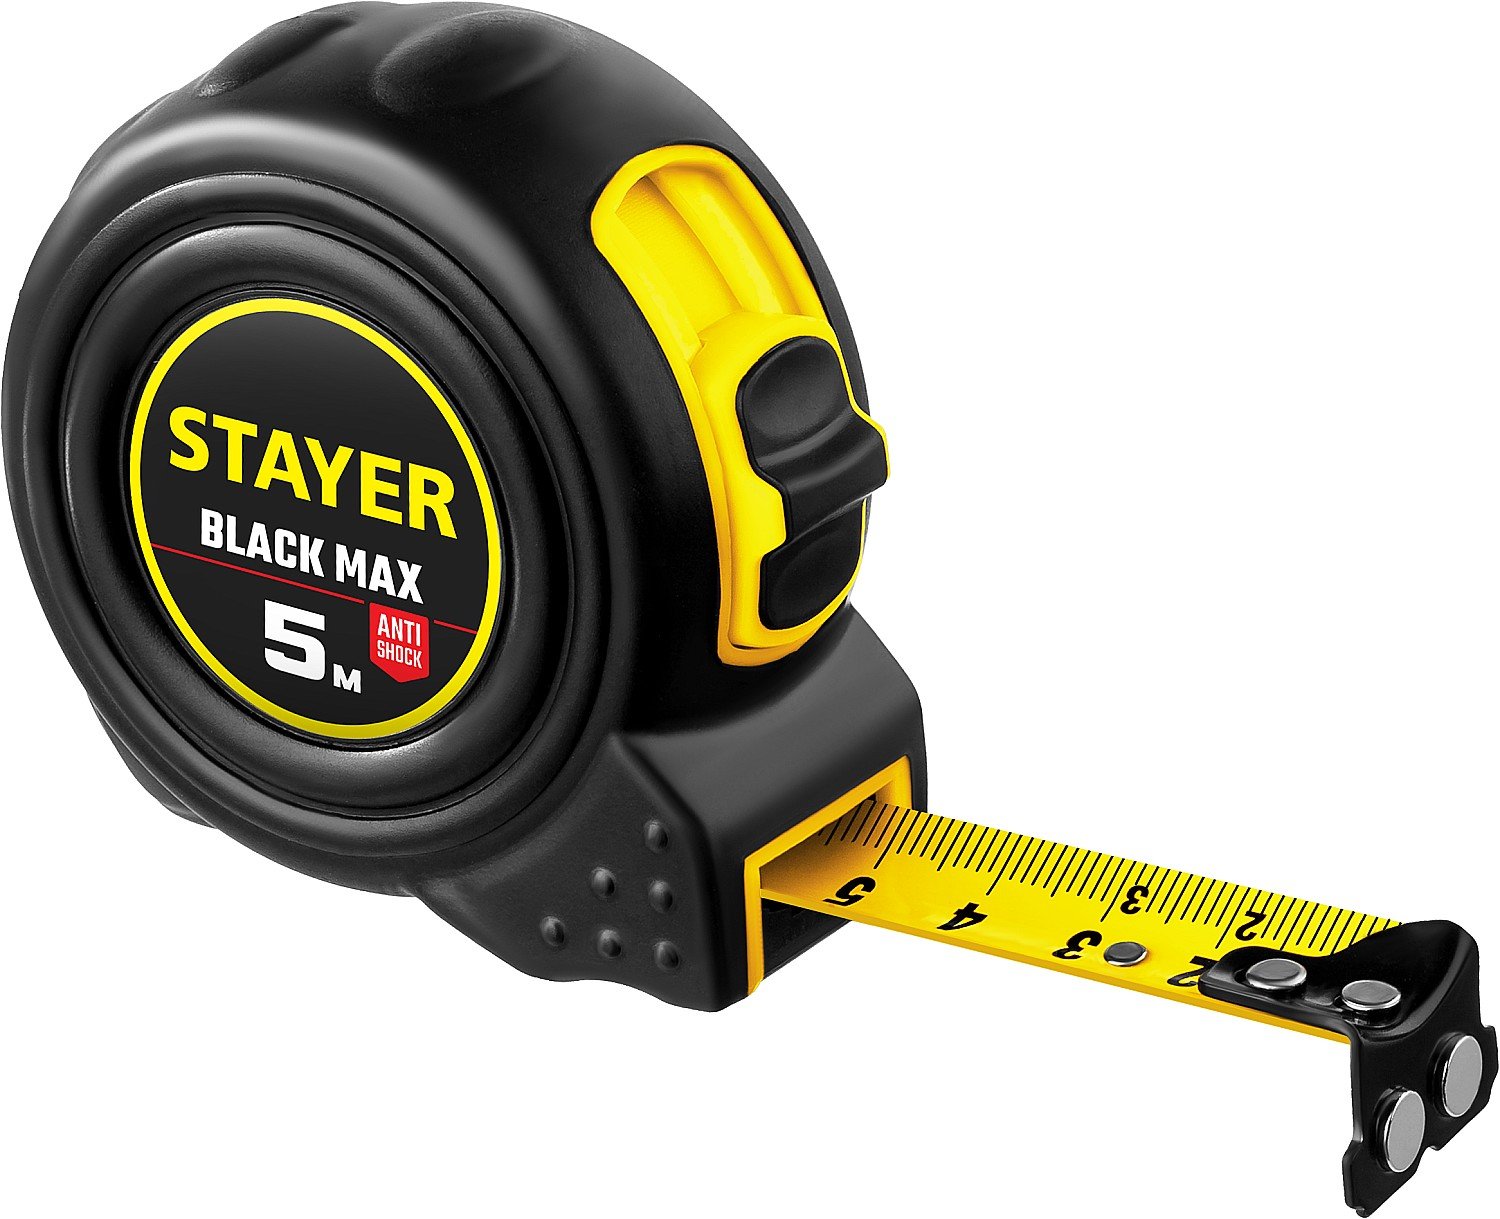     STAYER BlackMax 5  19 (3410-05_z02)